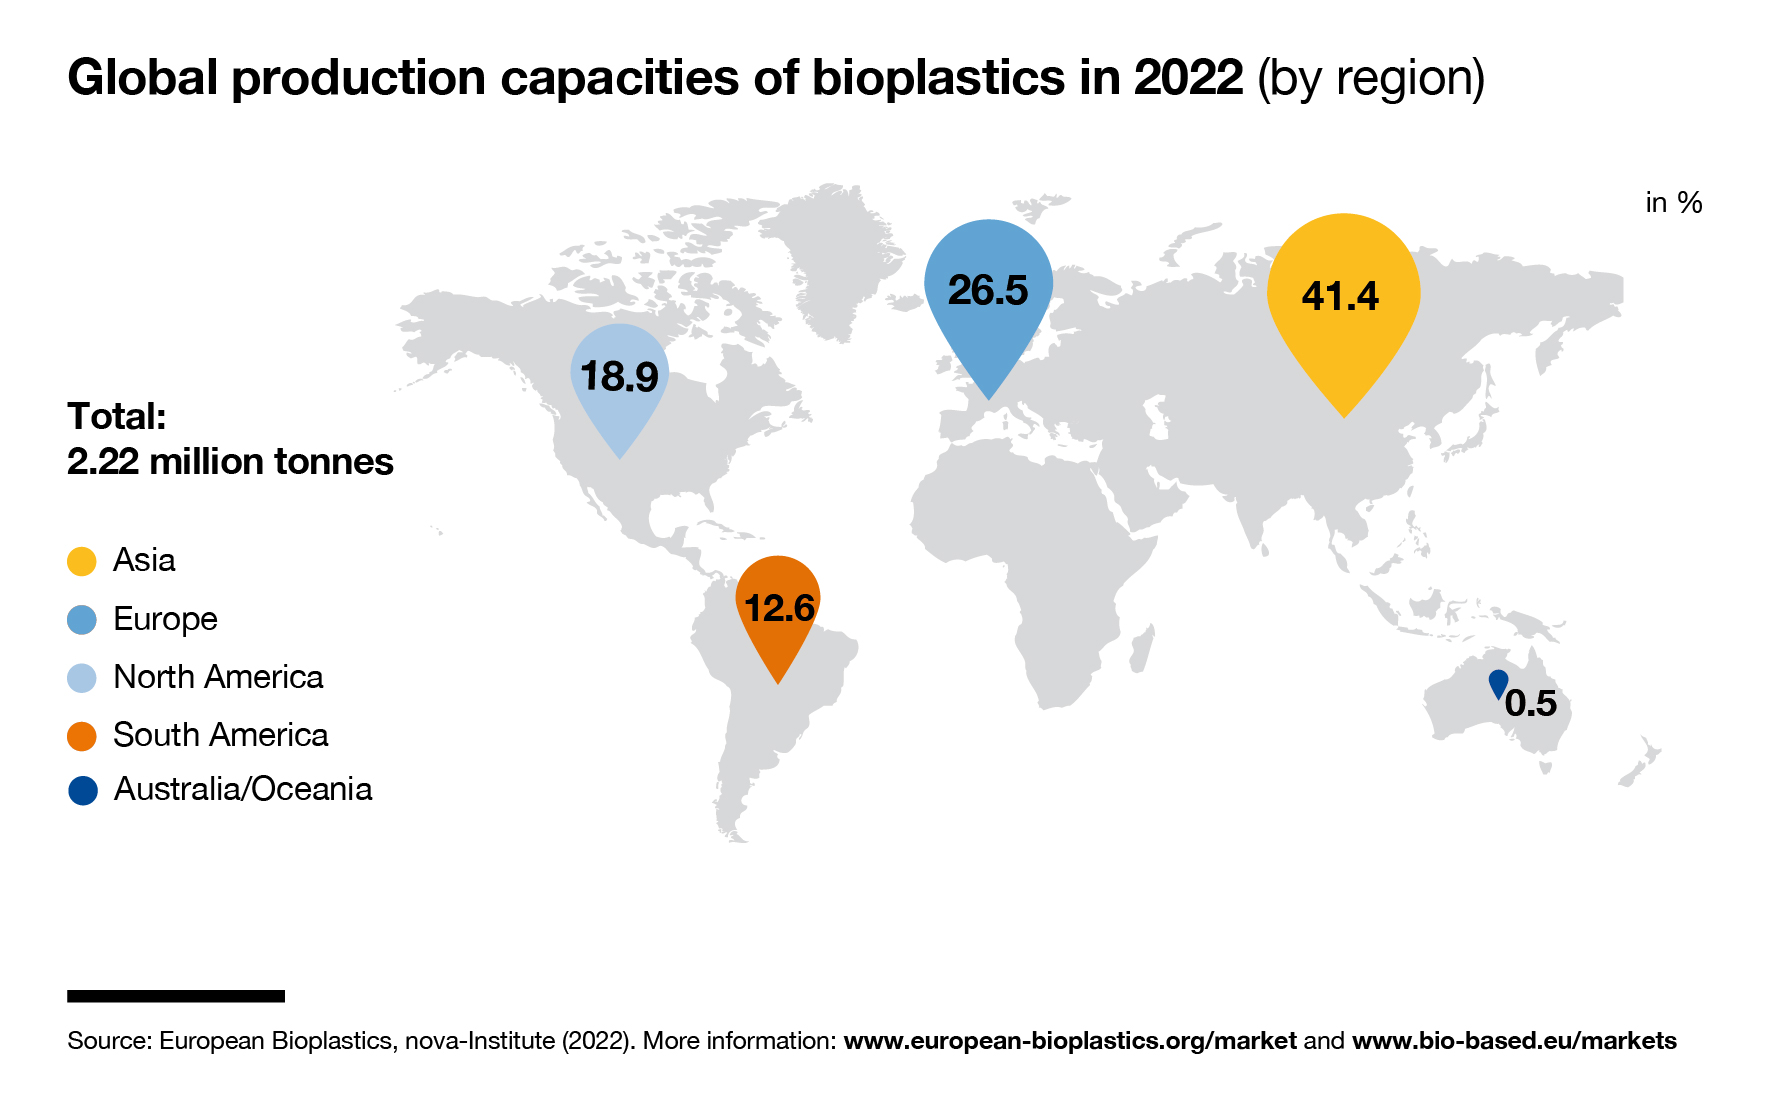 Global production capacities of bioplastics in 2022 (world map)